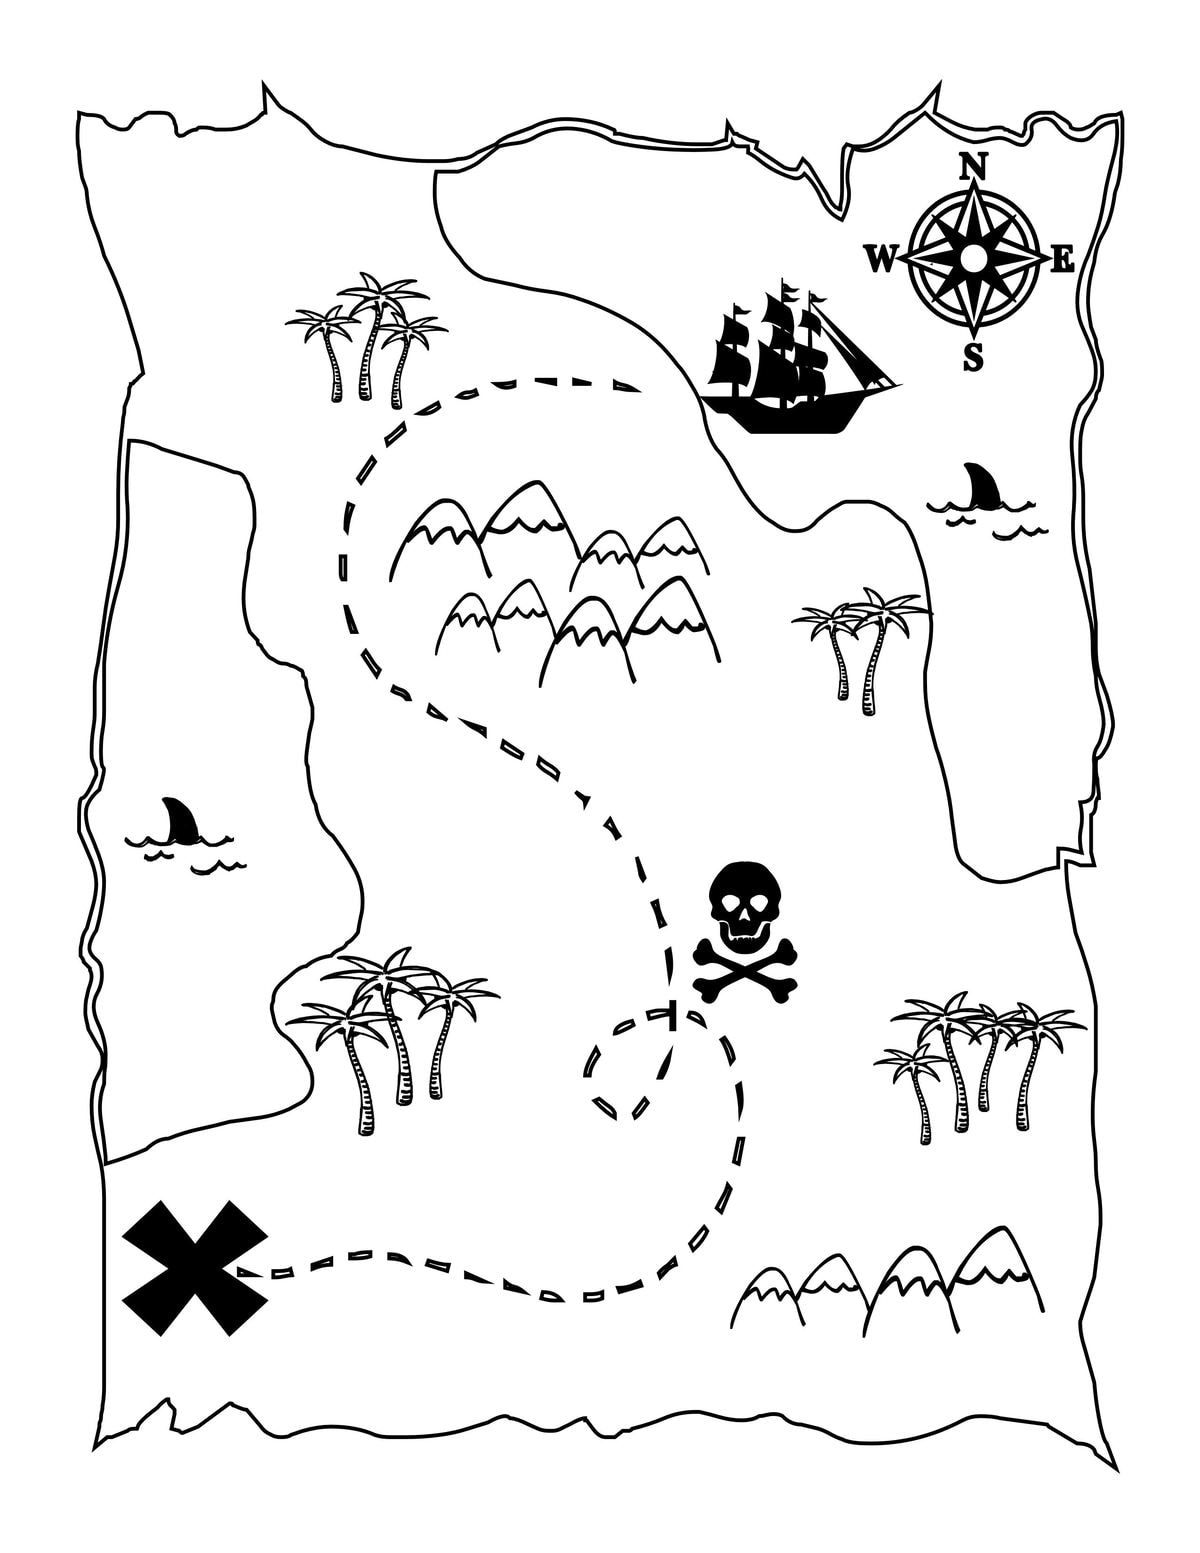 Printable treasure map kids activity â lets diy it all â with kritsyn merkley